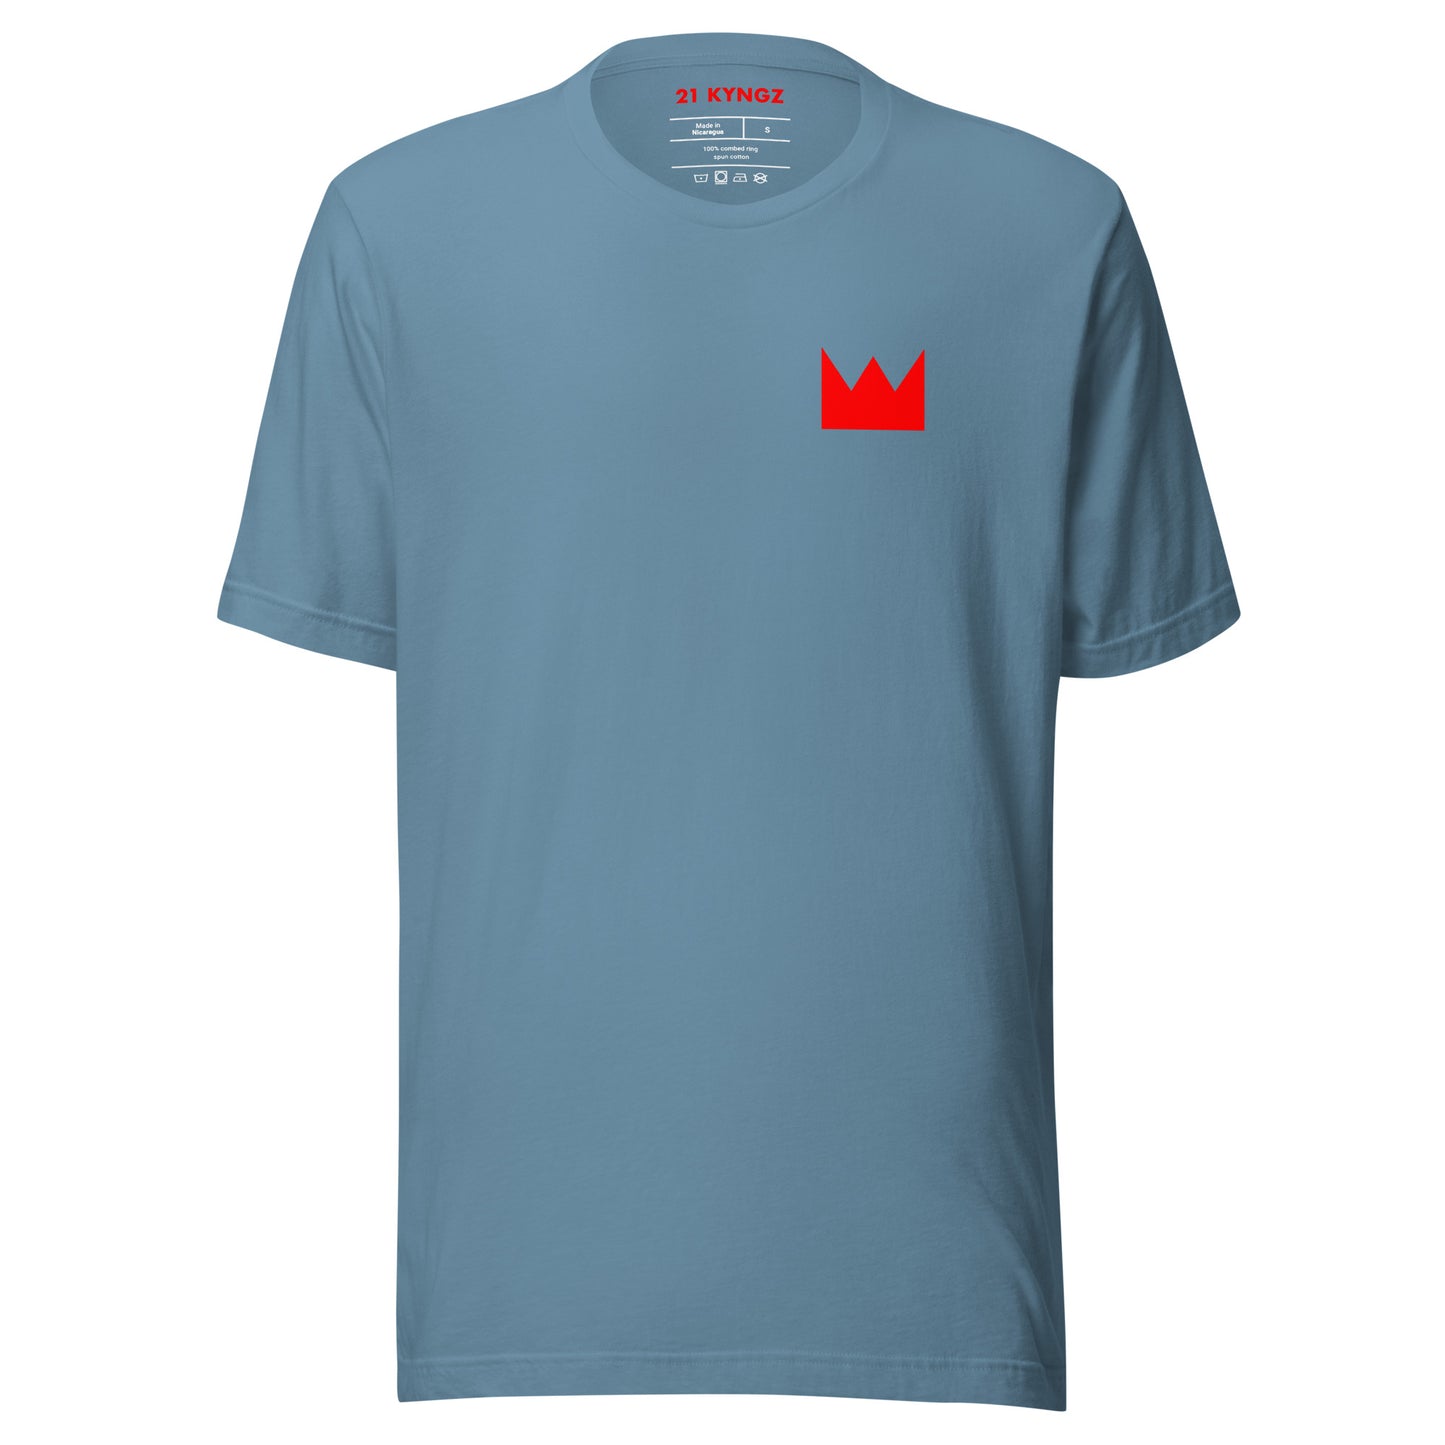 21 KYNGZ Little Crown (R) Unisex t-shirt